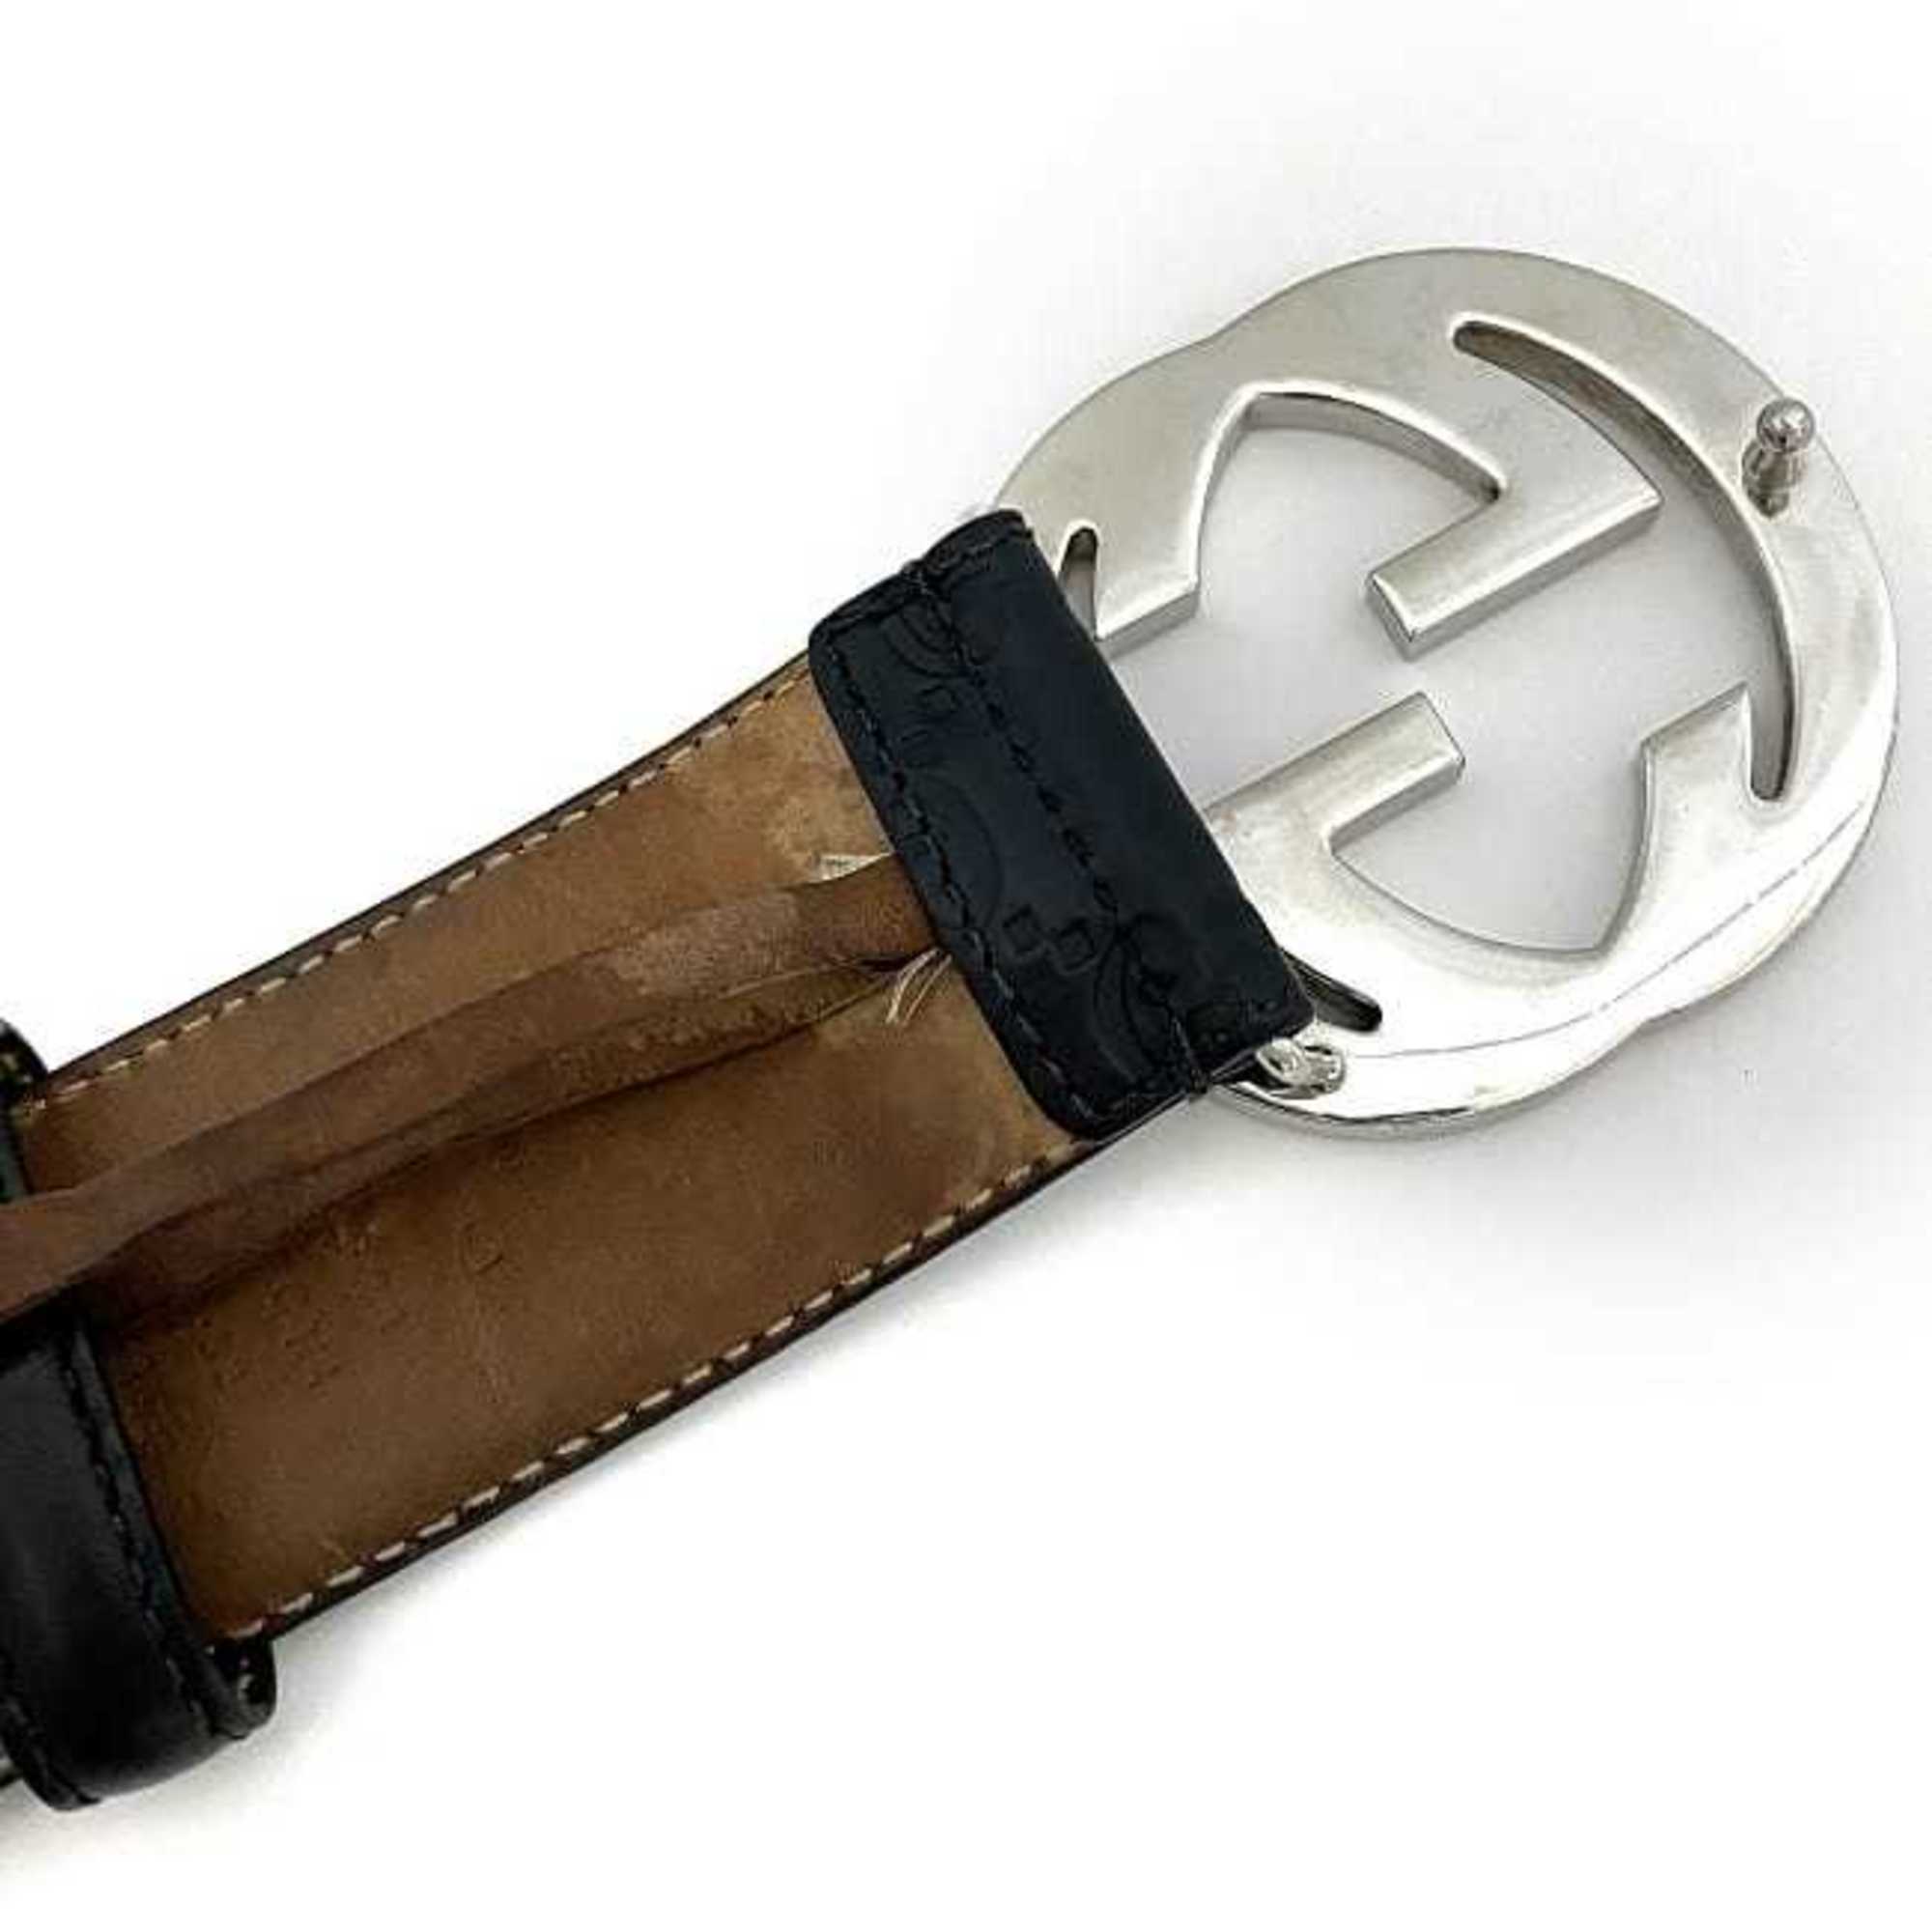 Gucci Belt Black Silver Stripe Interlocking 411924 GG Men's 40mm Leather Metal GUCCI Waist Buckle